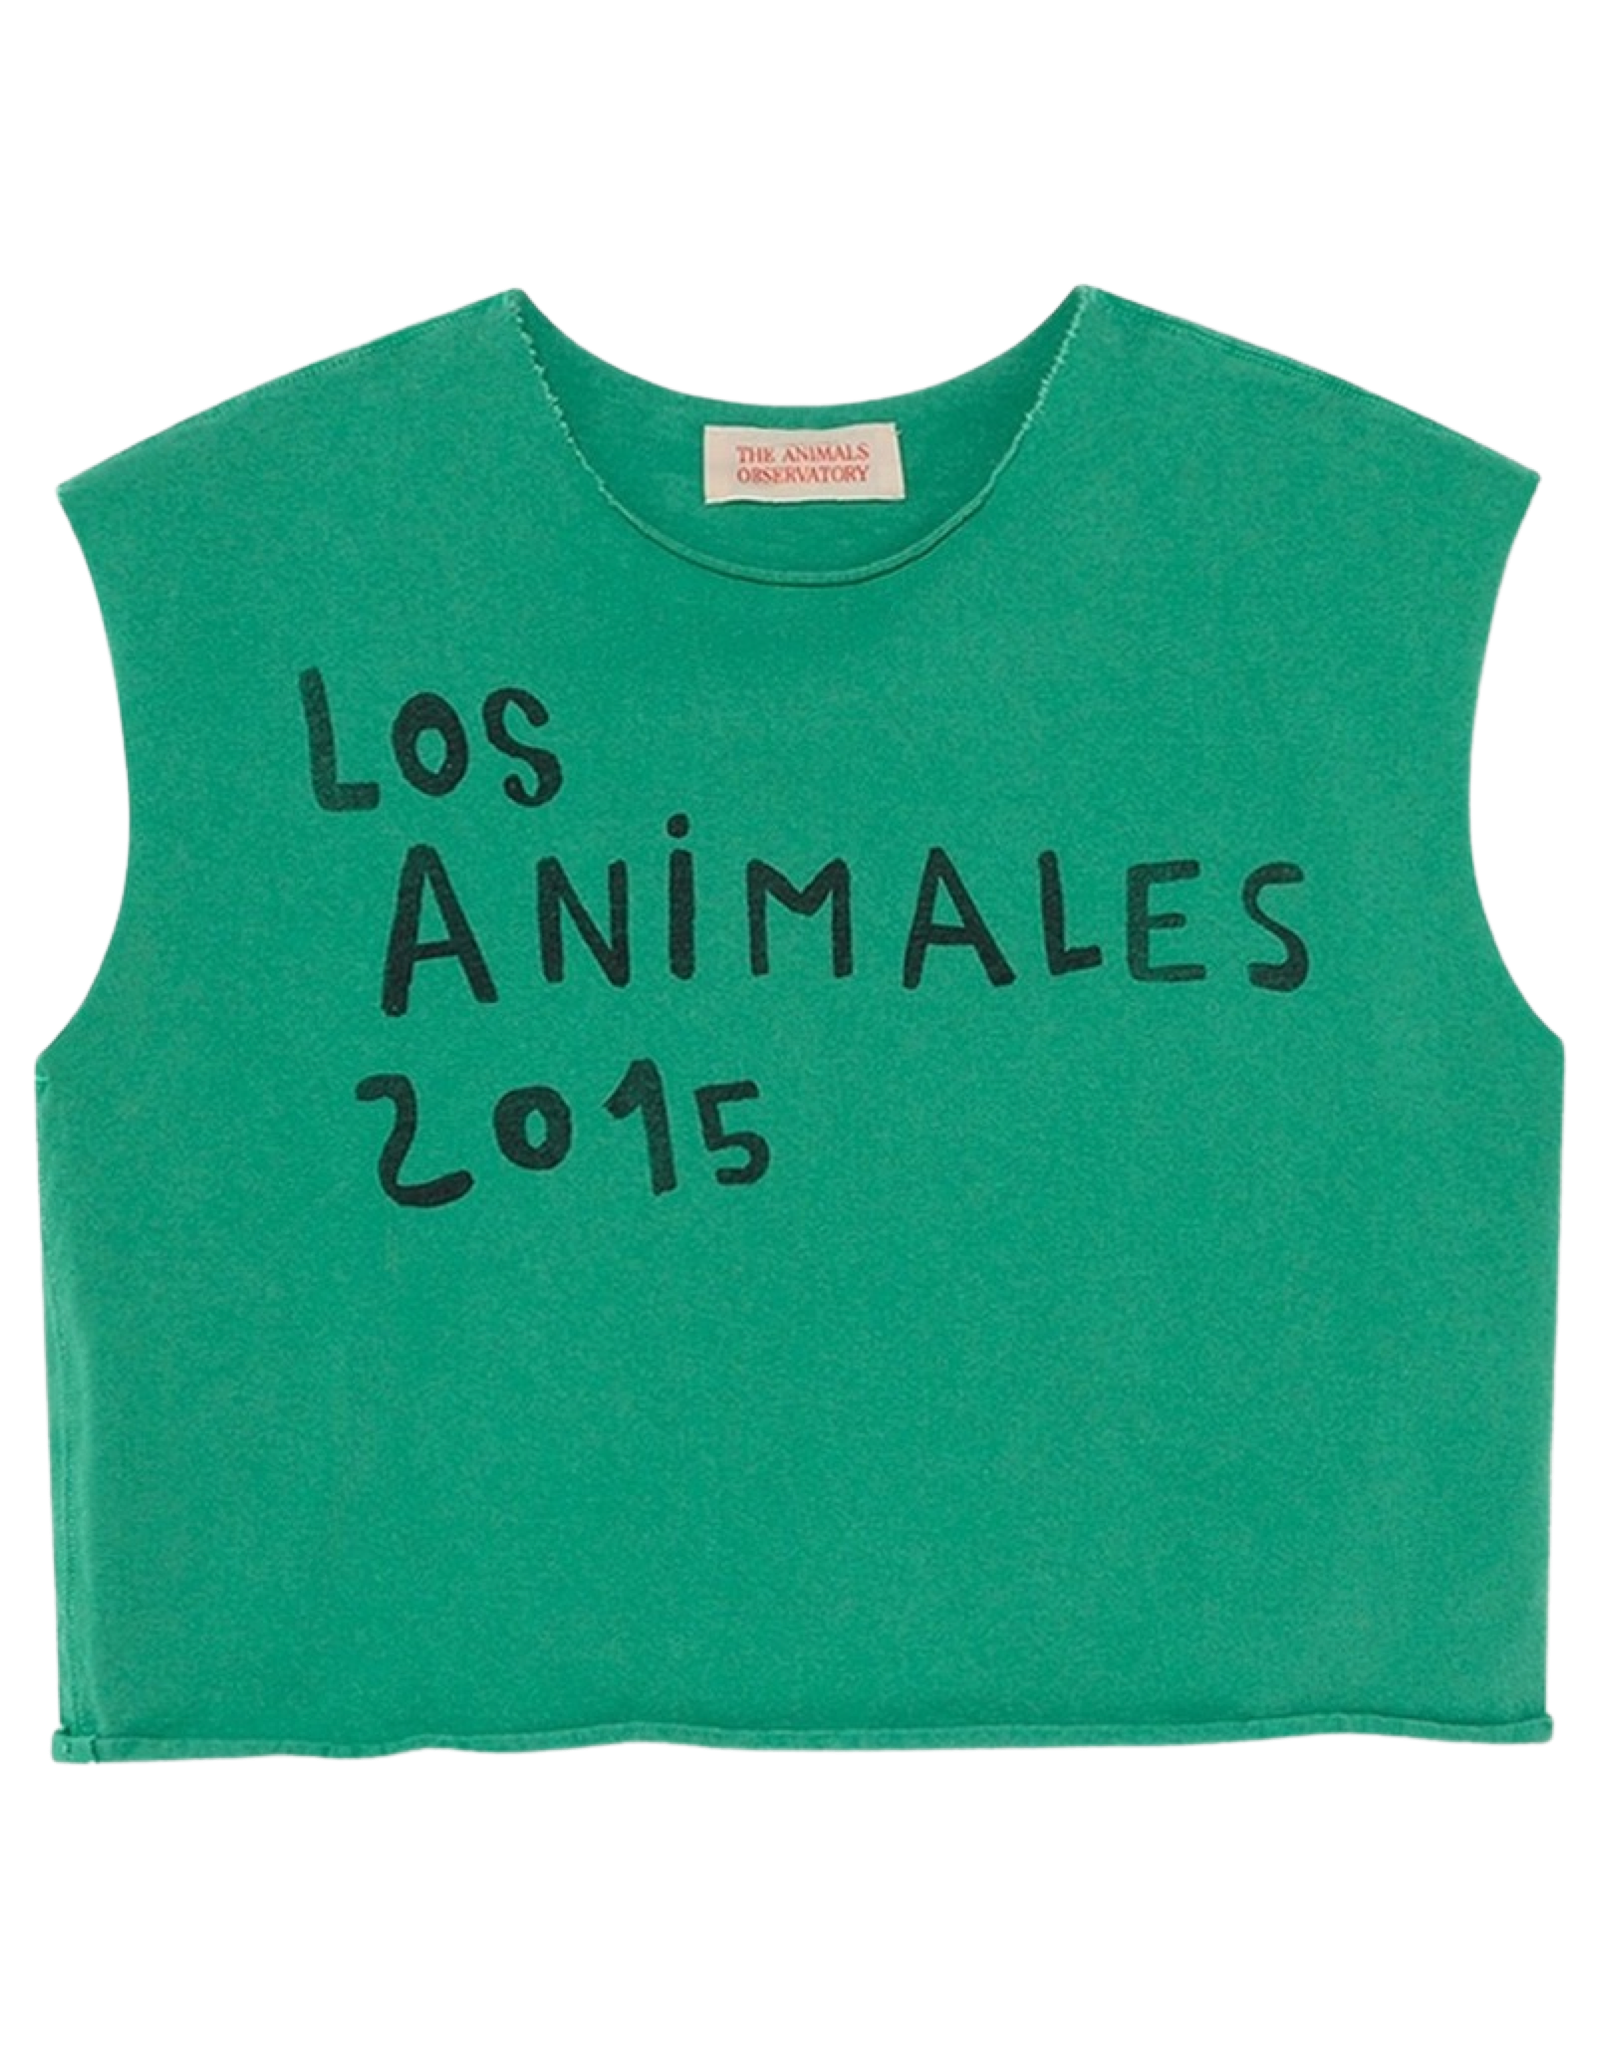 The Animal Observatory Los Animales Prawn T-Shirt